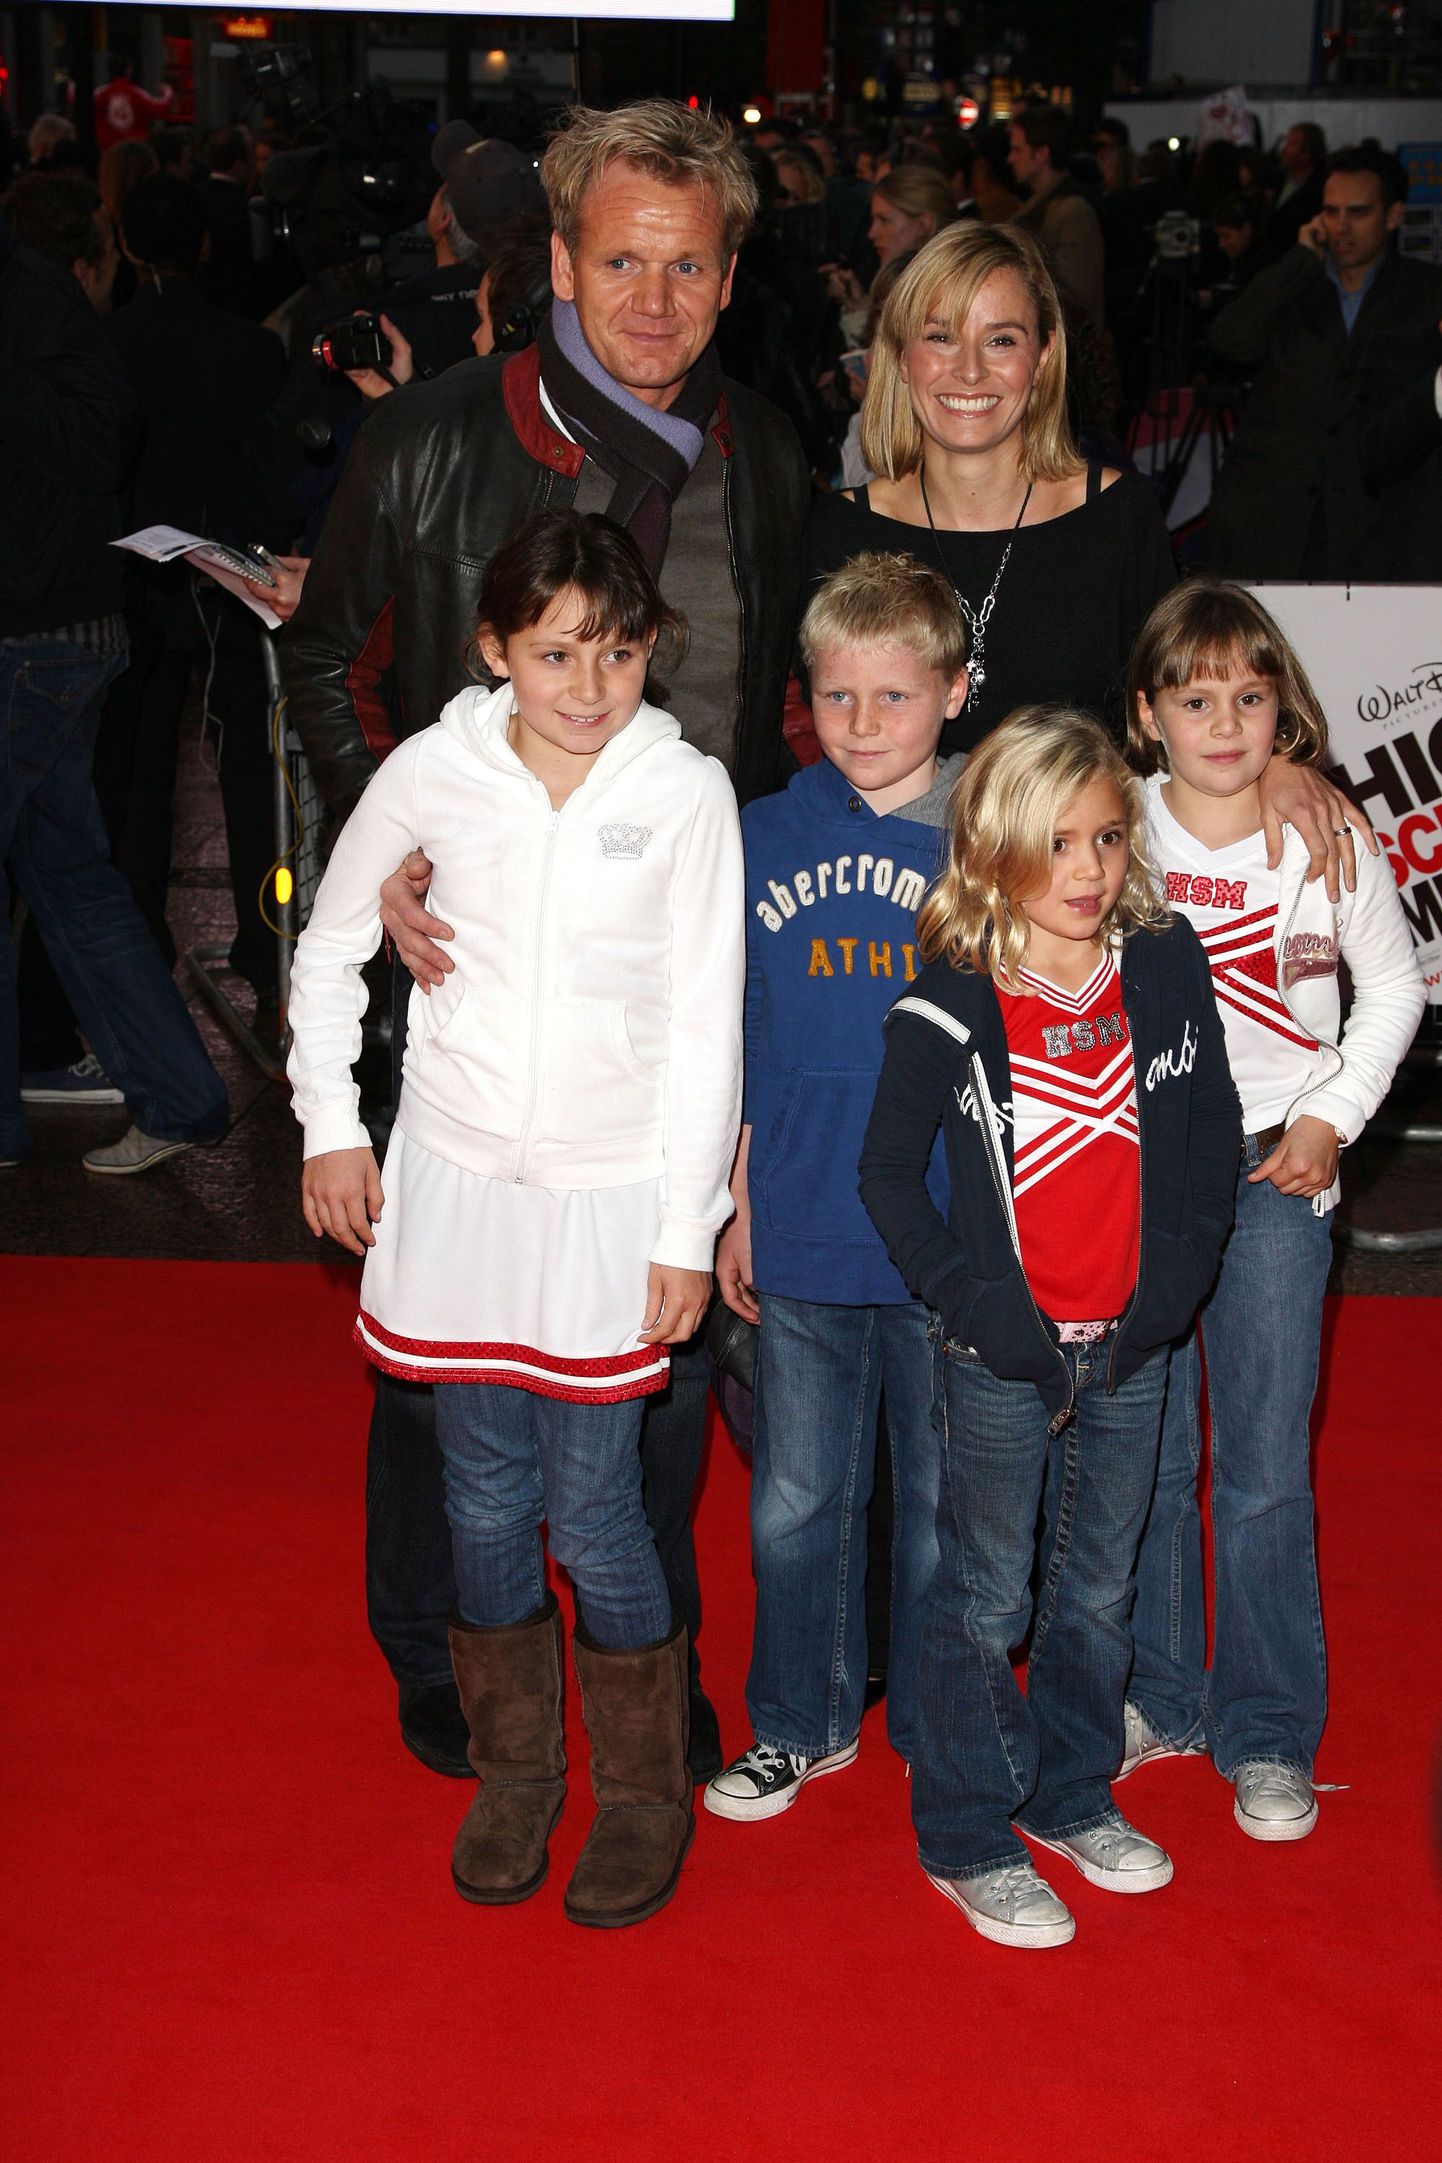 Gordon ja Tana Ramsay koos lastega